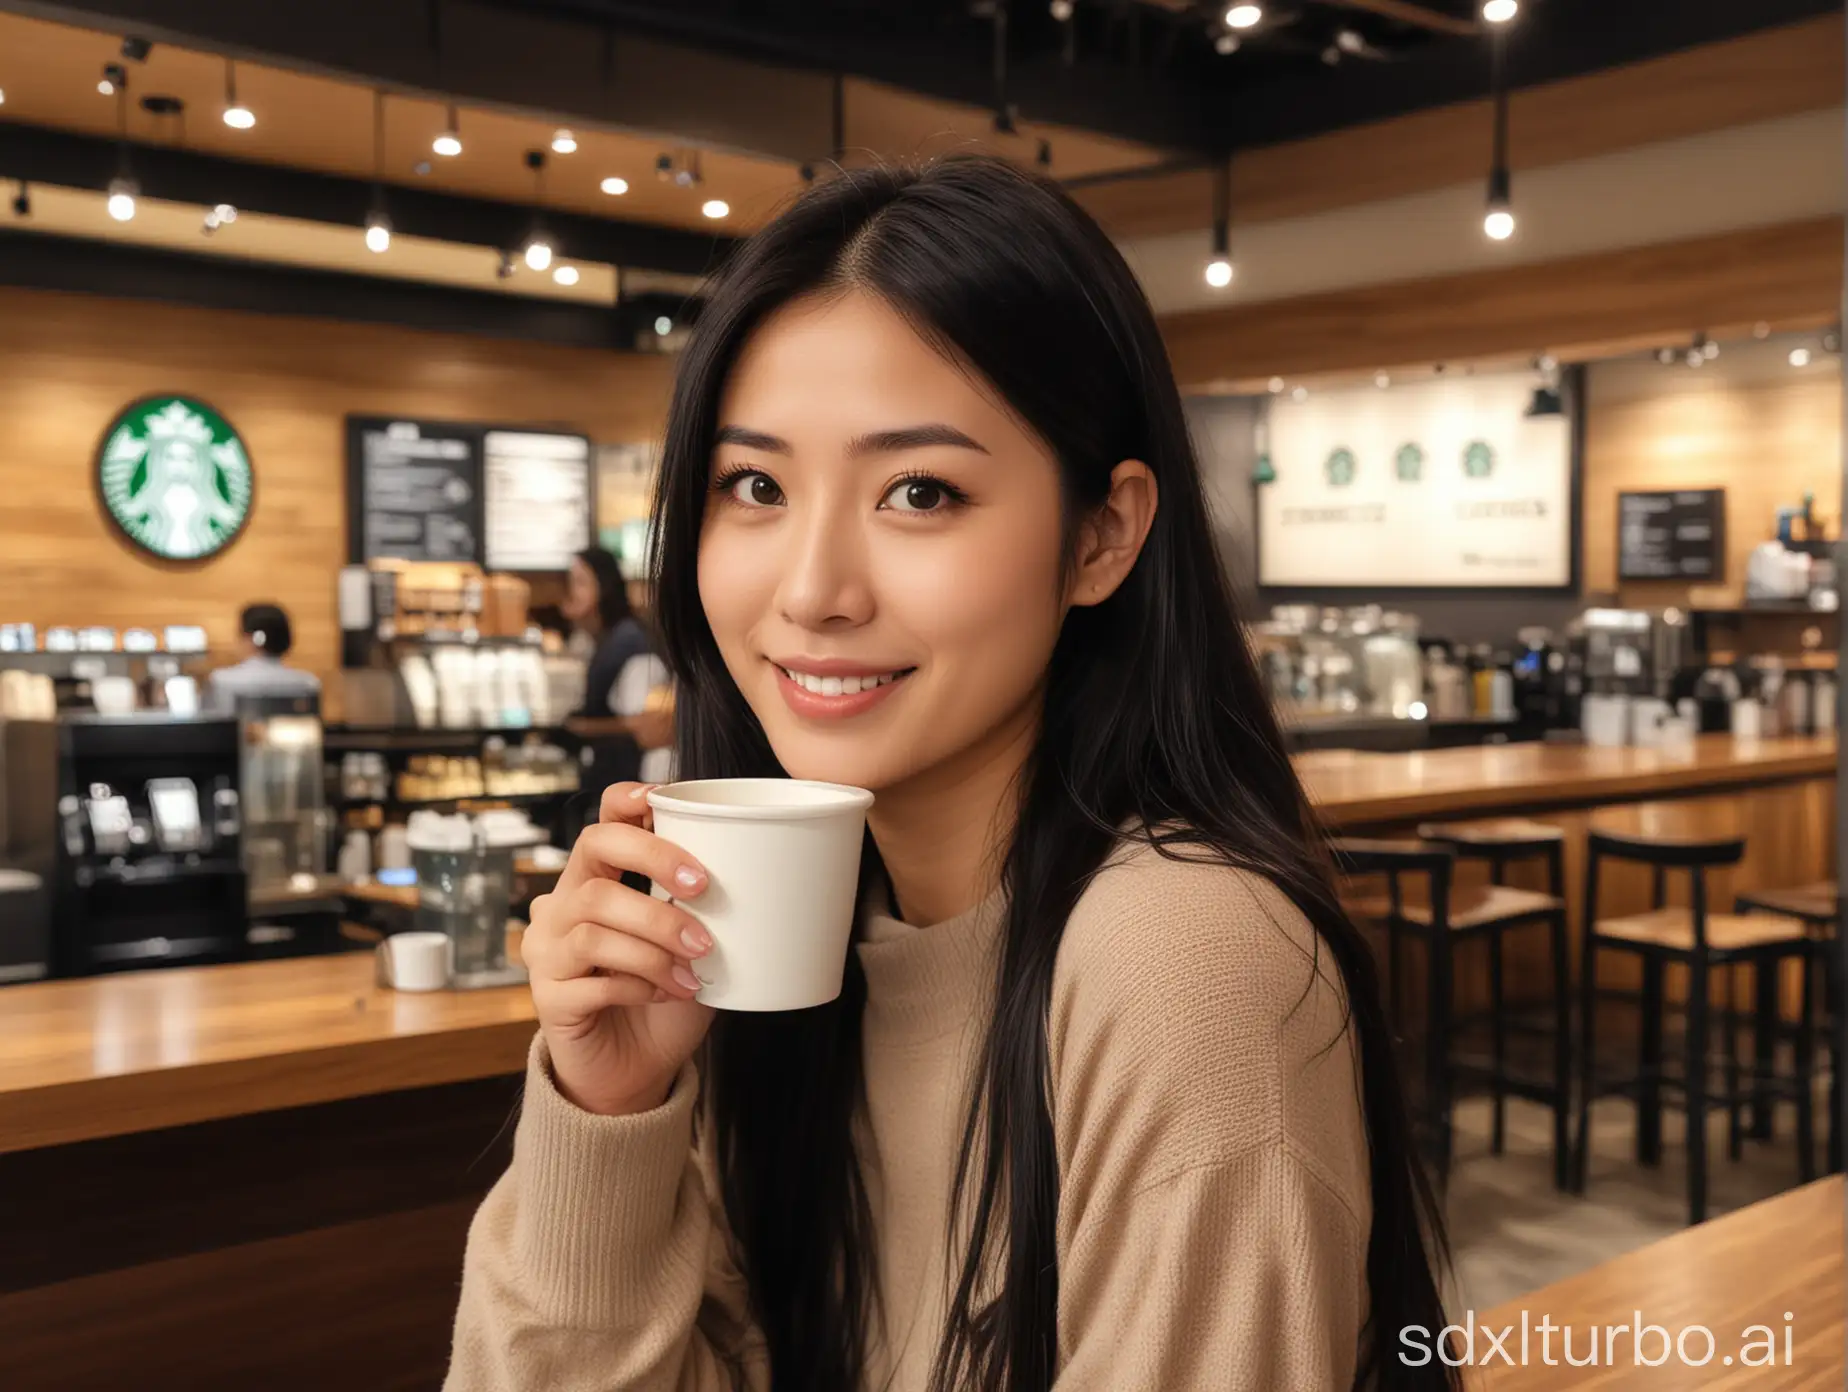 Japanese-Woman-Enjoying-Starbucks-Coffee-with-Friends-in-Stylish-Setting